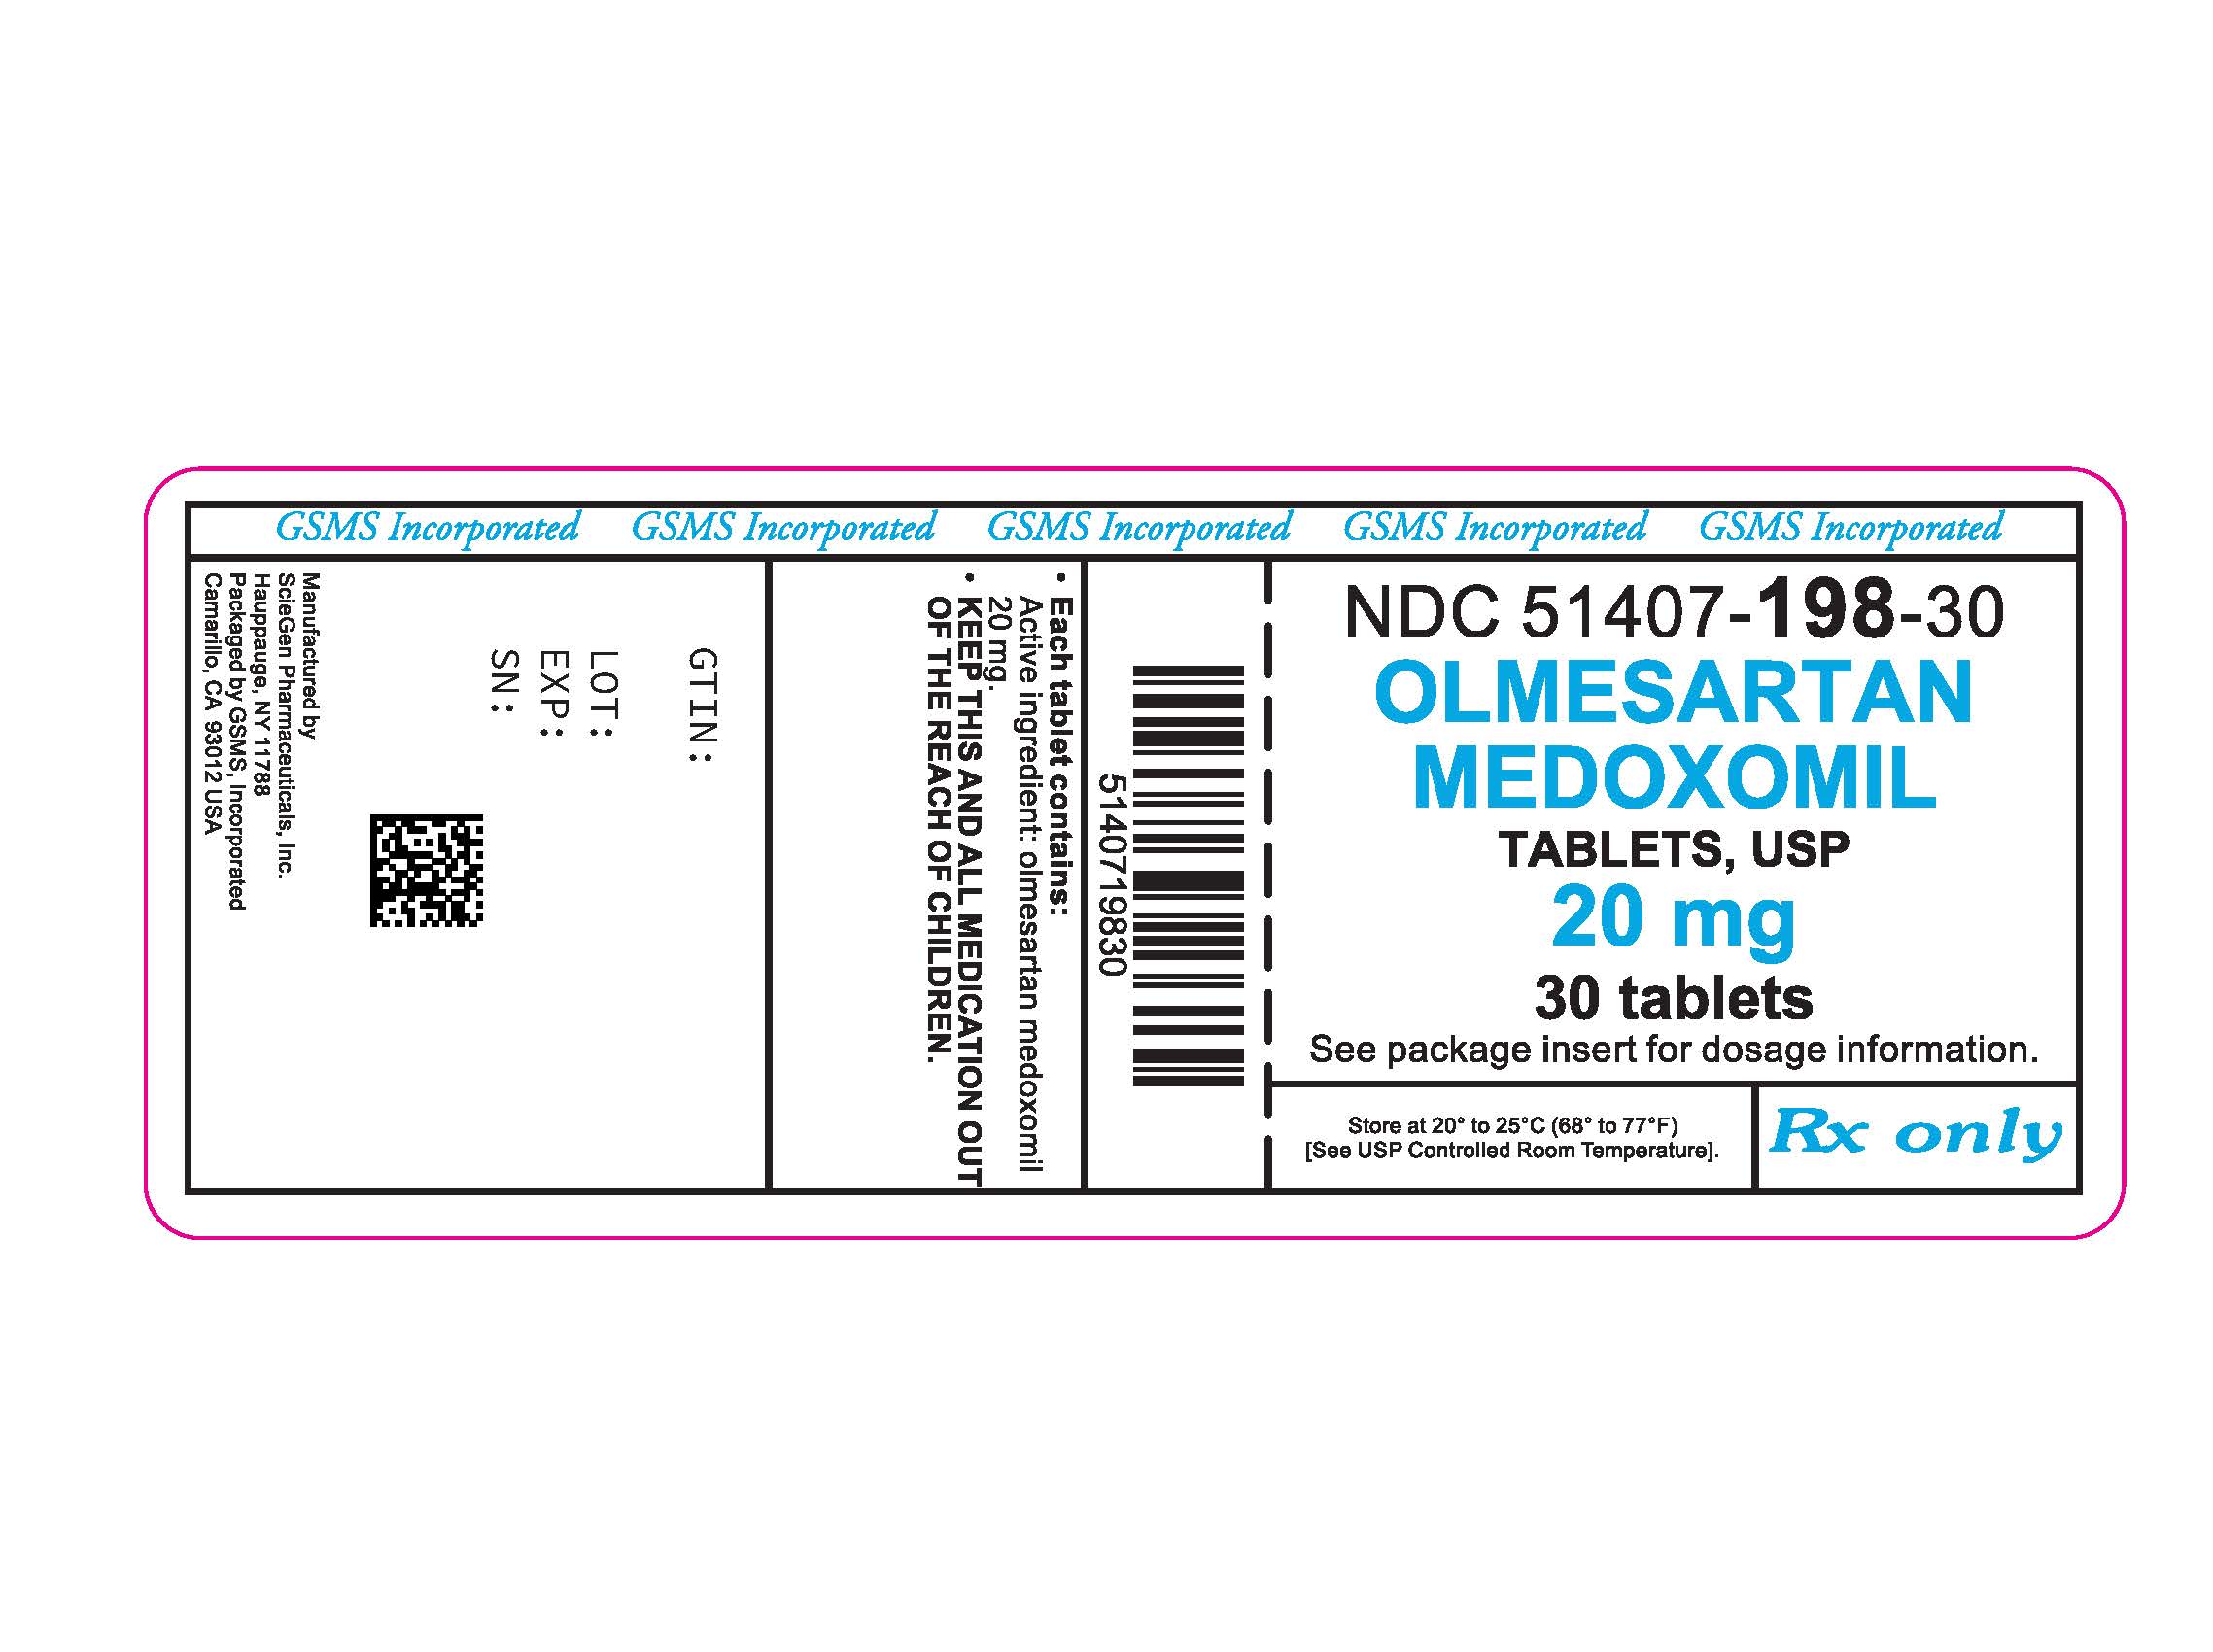 51407-198-30LB - OLMESARTAN MEDOXOMIL 20 MG TABS - REV DEC 2018.jpg